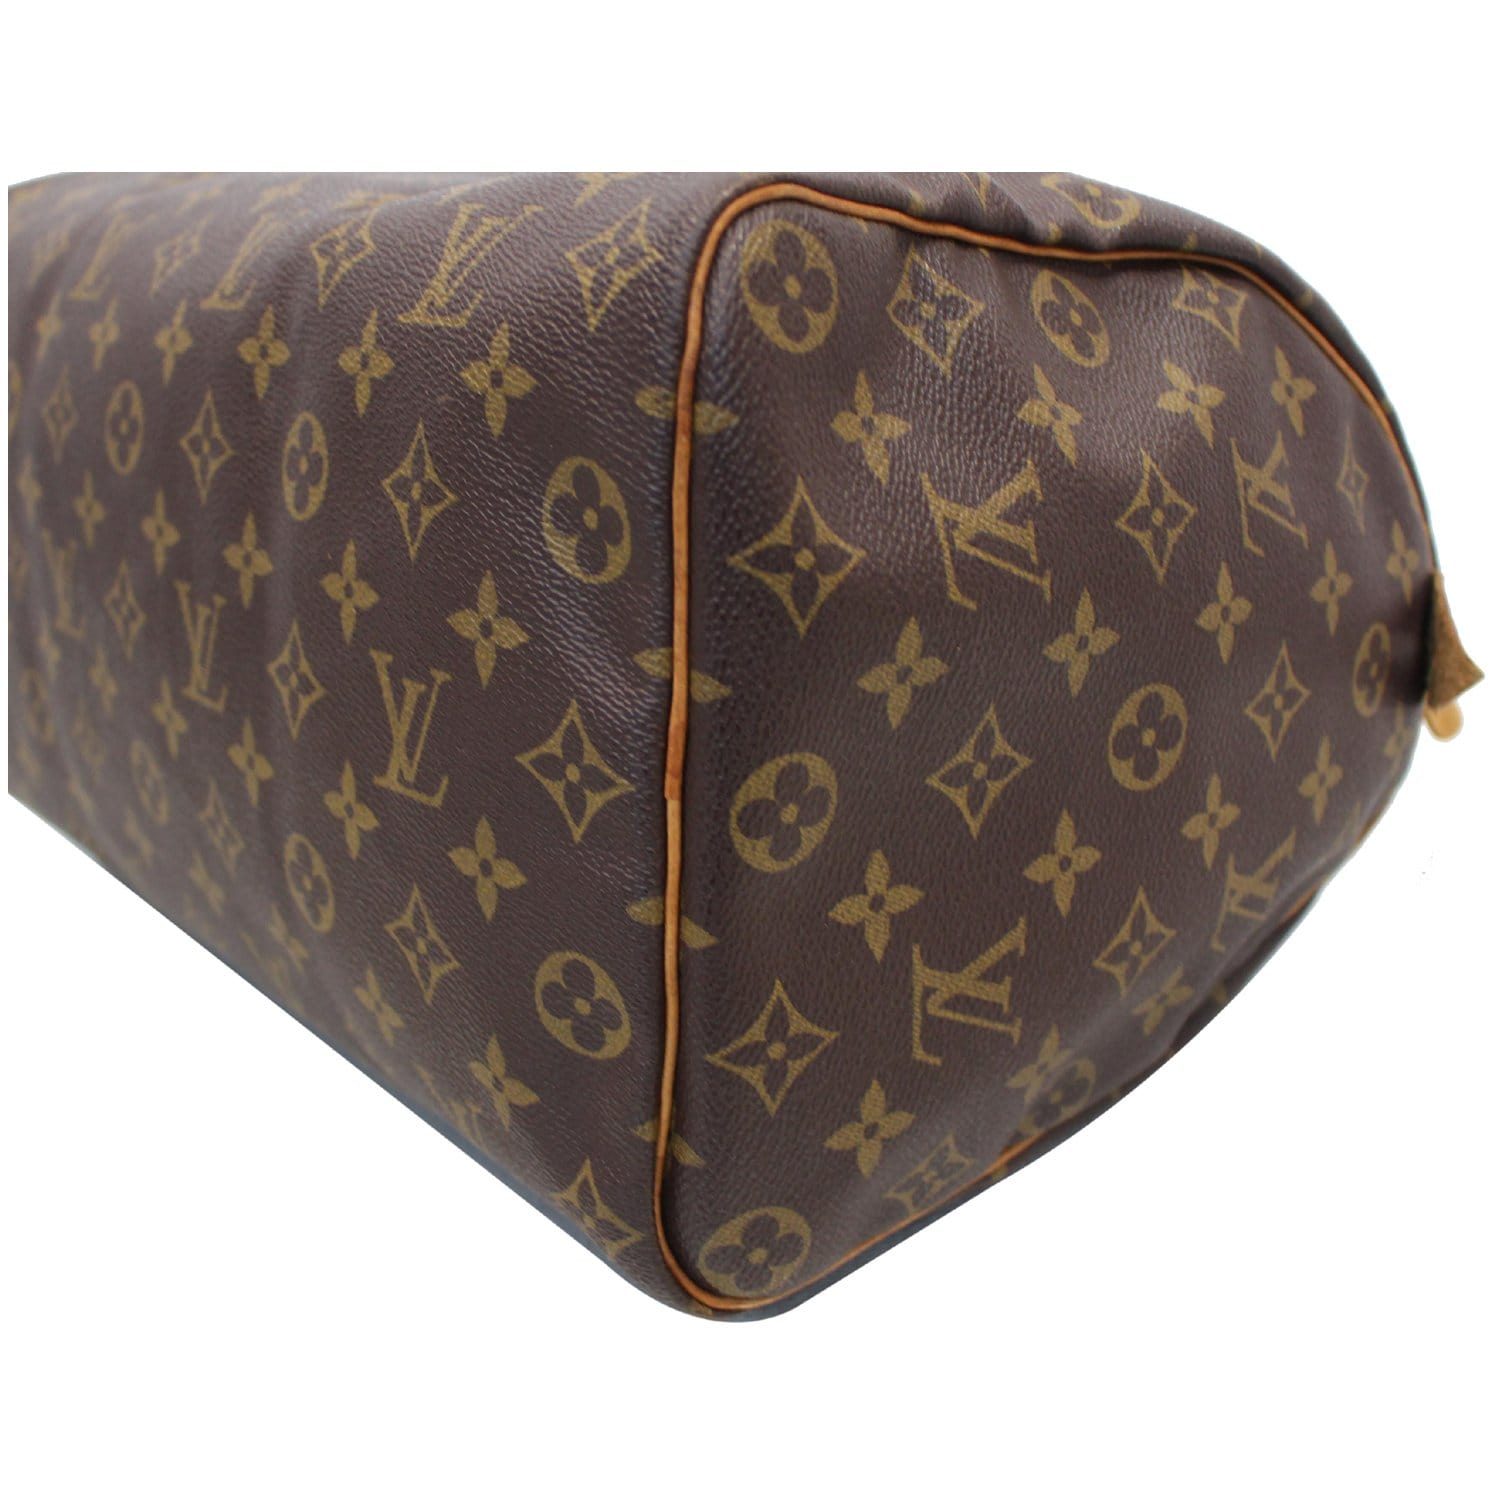 Authentic Louis Vuitton Speedy 35 Hand Bag Monogram Brown #17863